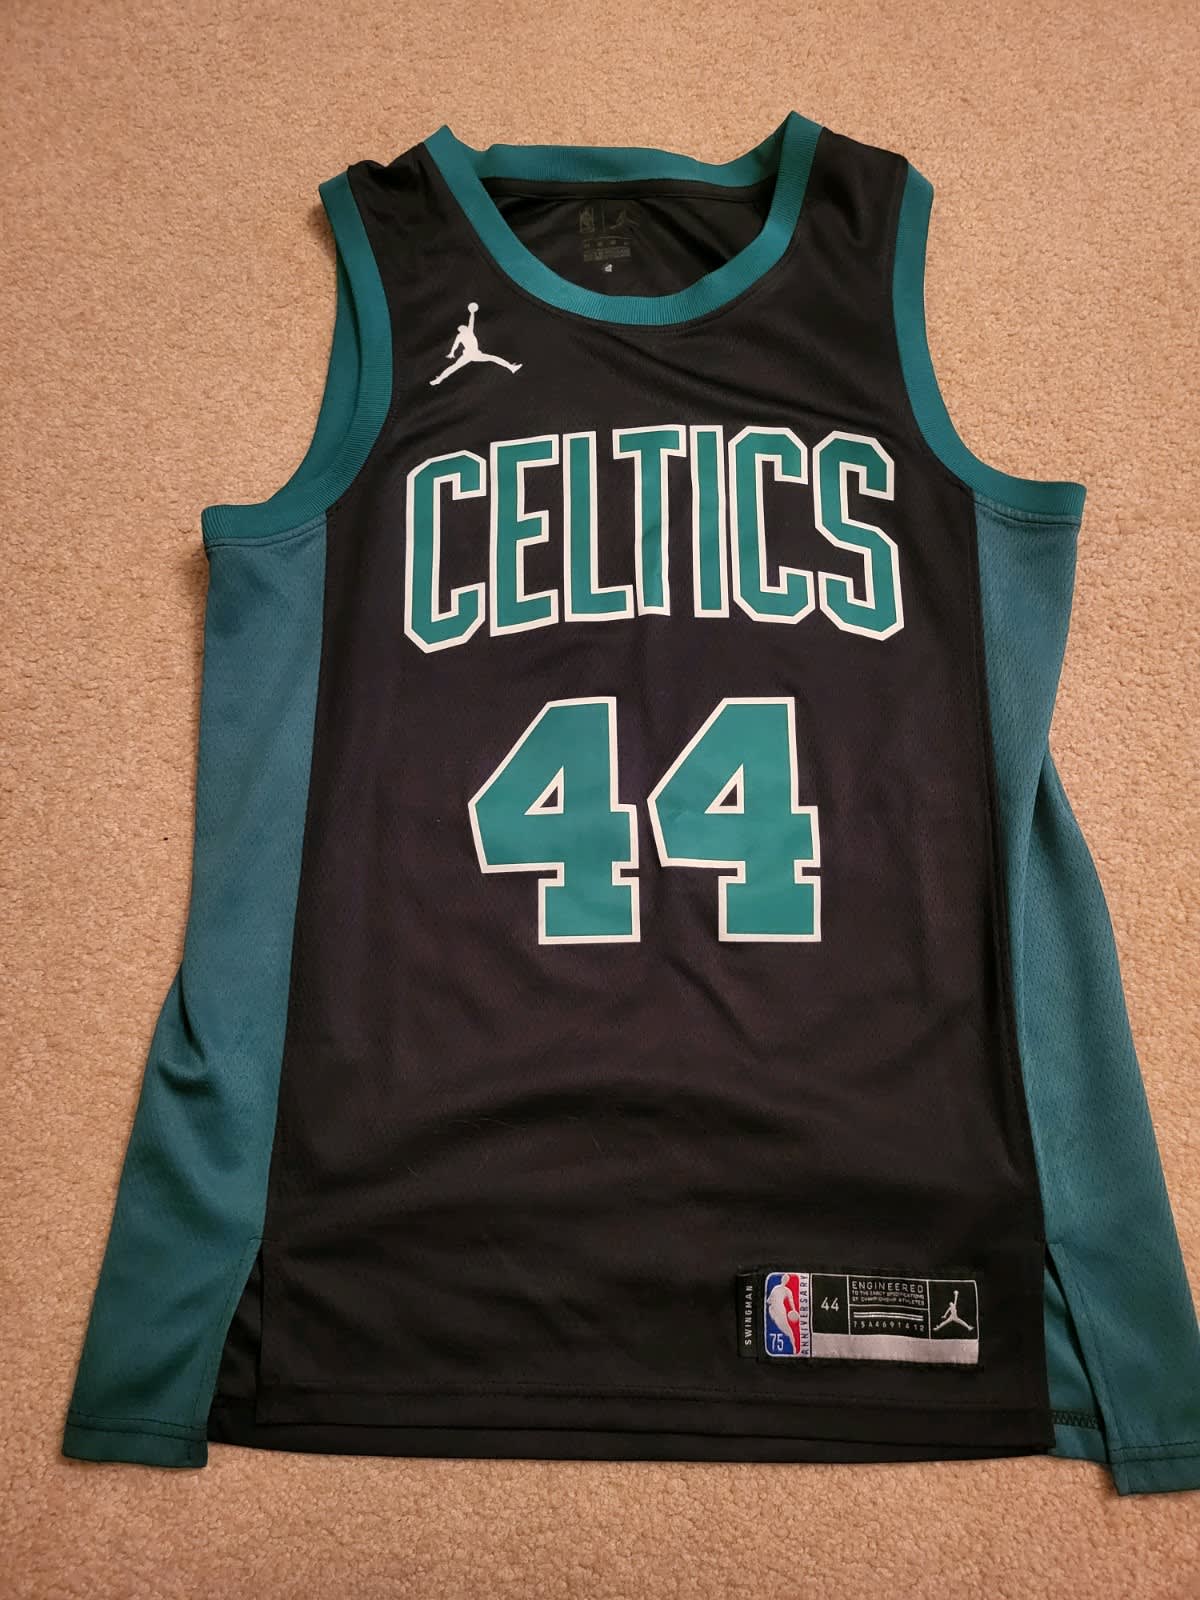 Nike Isaiah Thomas Boston Celtics Green Icon Swingman Jersey Youth (S-XL)